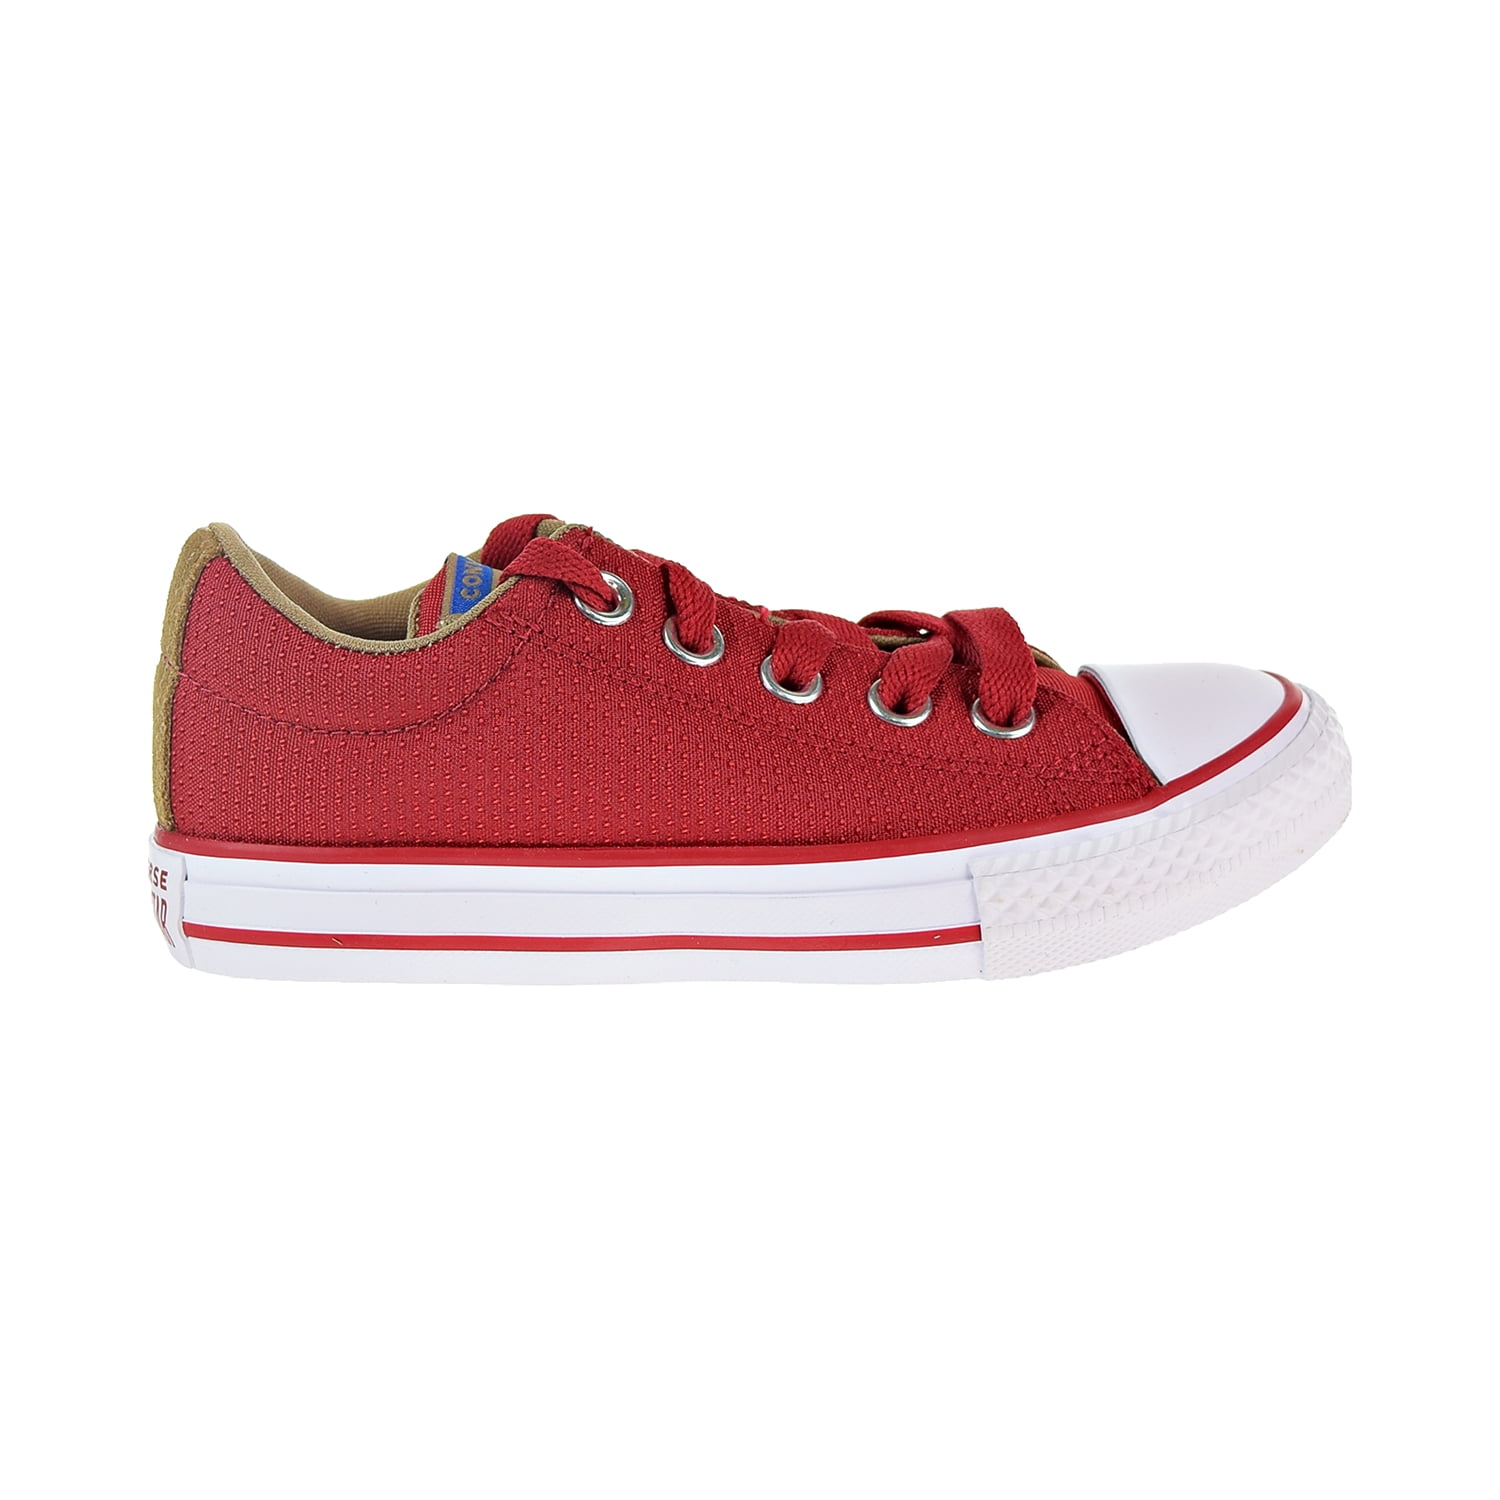 Converse Chuck Taylor All Star Street Slip Kids' Shoes Red-Teak - Walmart.com